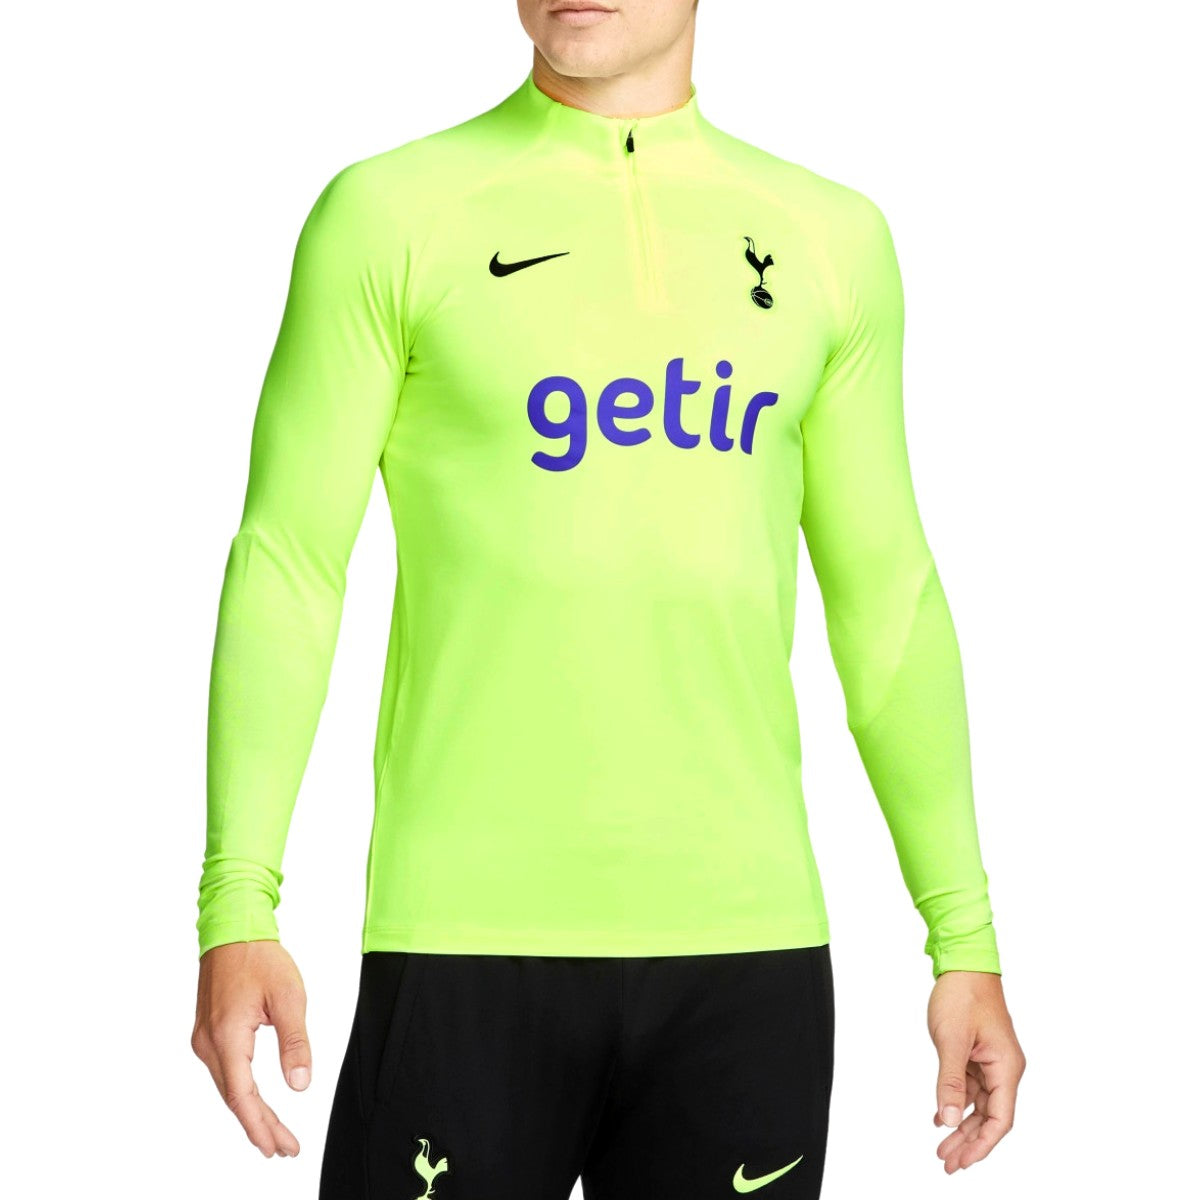 Tottenham Hotspur Yellow International Club Soccer Fan Jerseys for sale